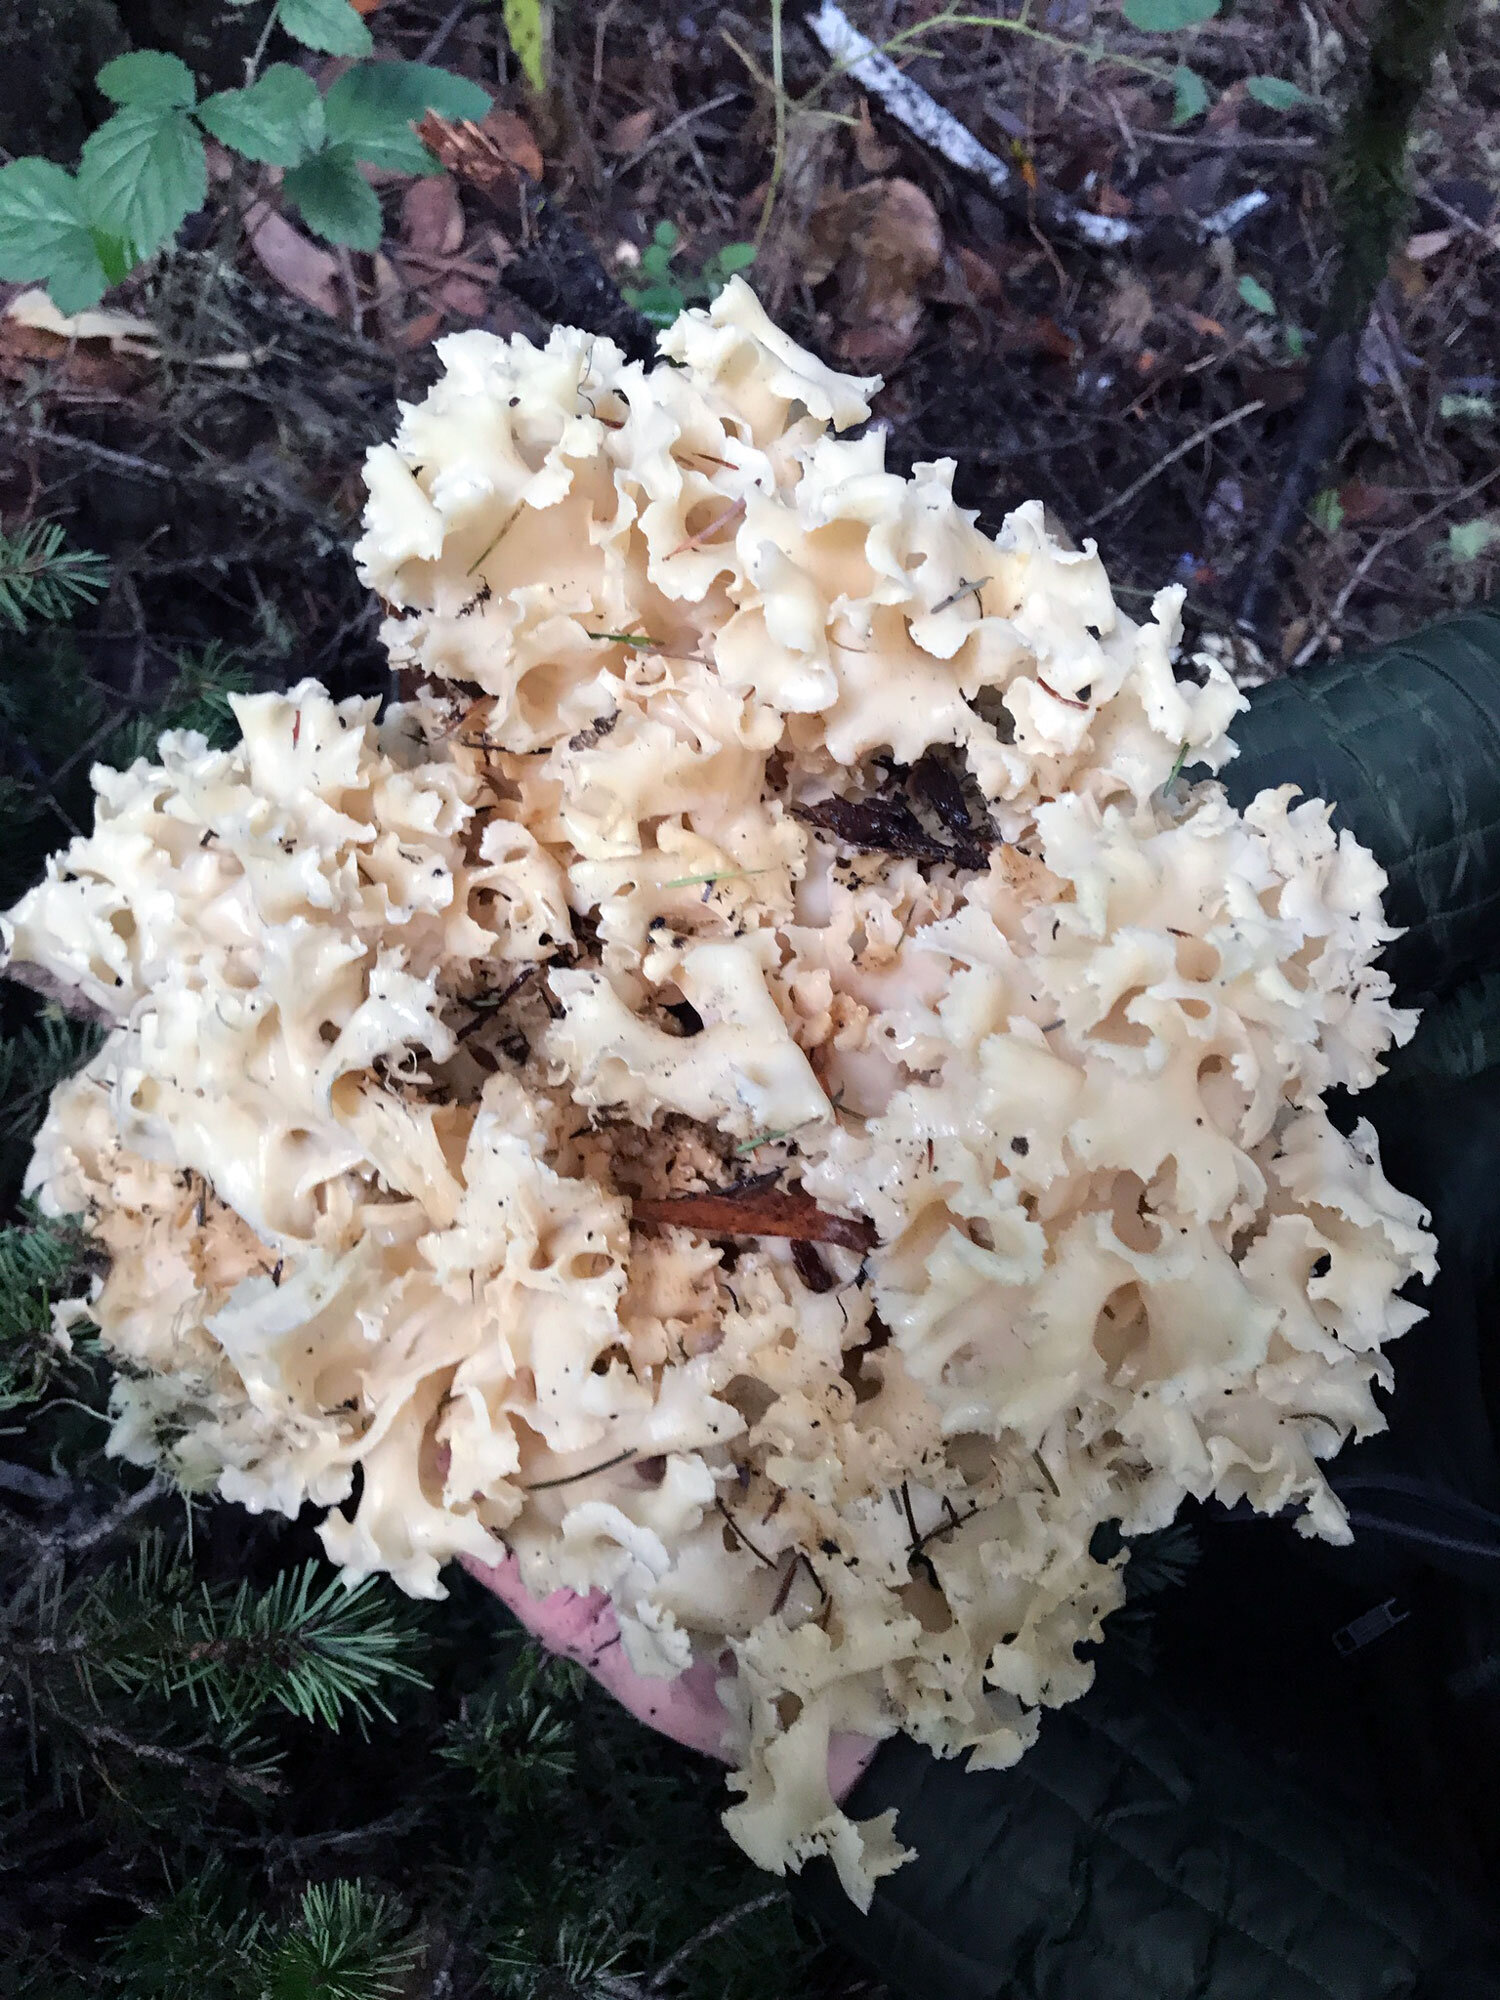 Western Cauliflower Mushroom (Sparassis radicata)